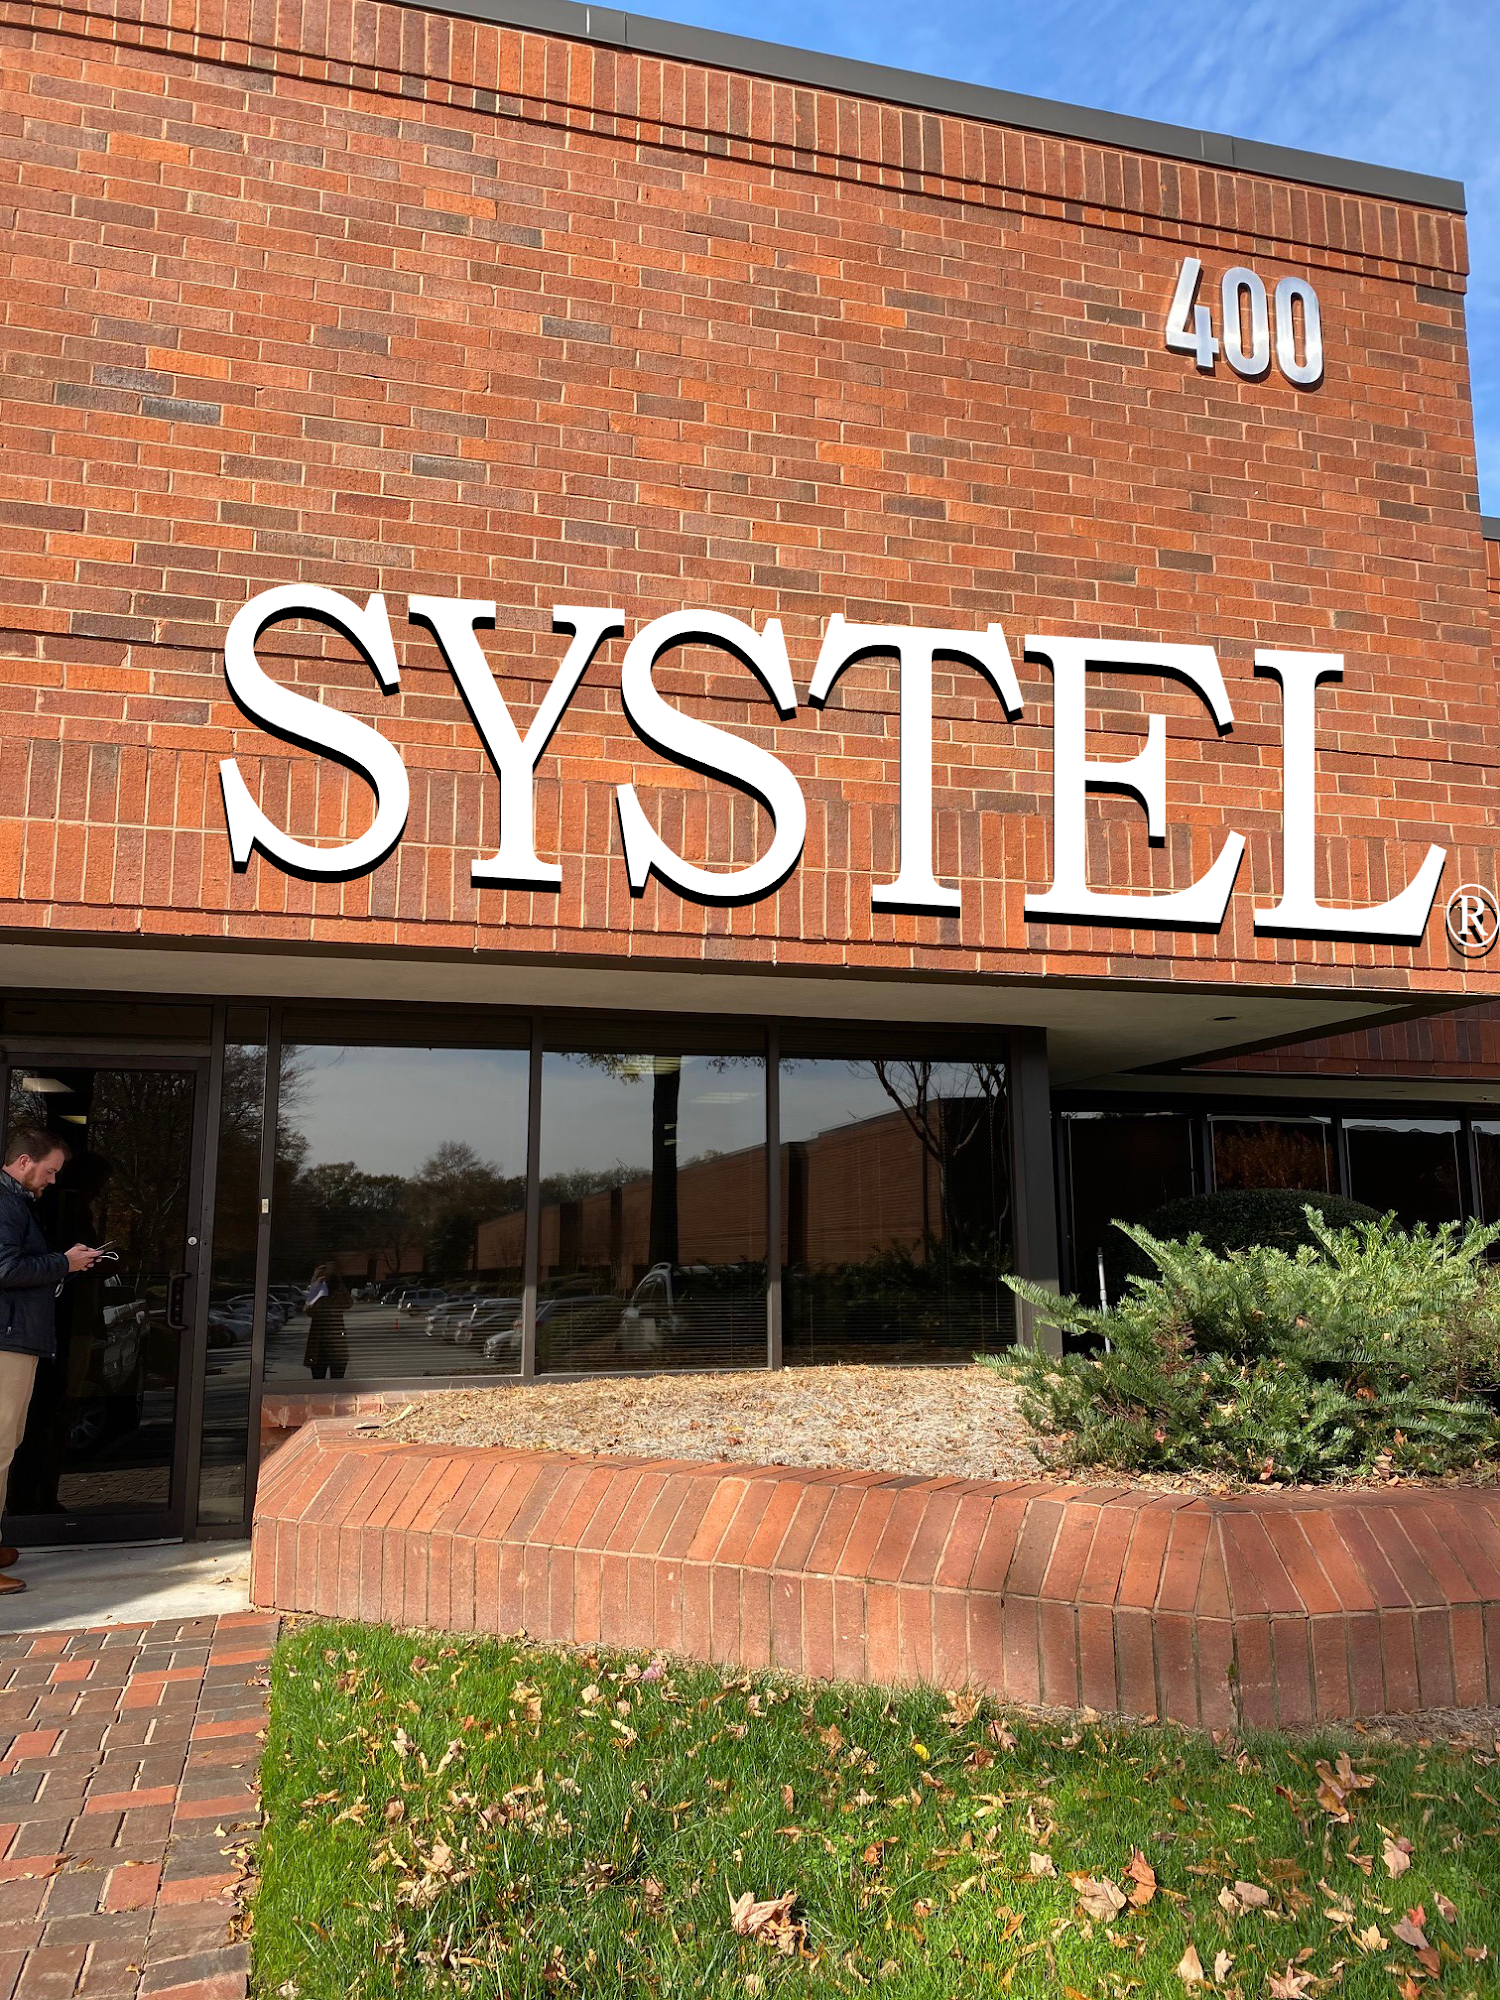 Systel Business Equipment - Atlanta